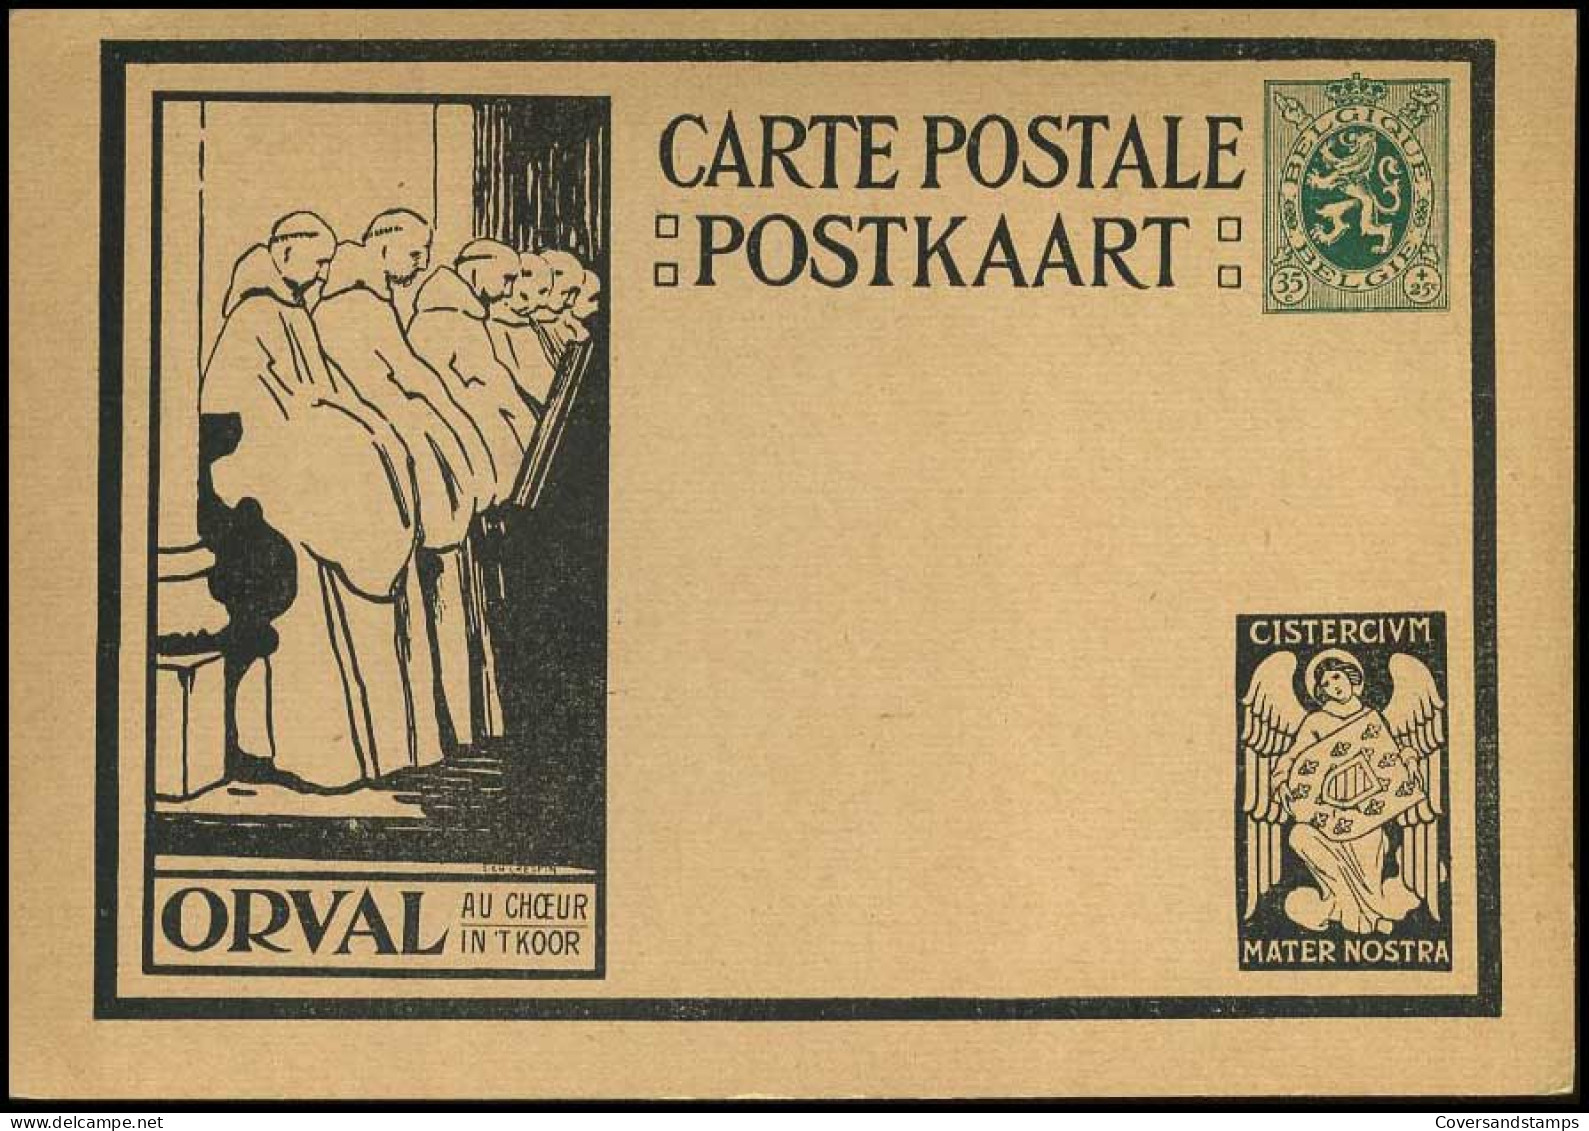 Postkaart - Orval, In 't Koor - Cartoline Illustrate (1971-2014) [BK]